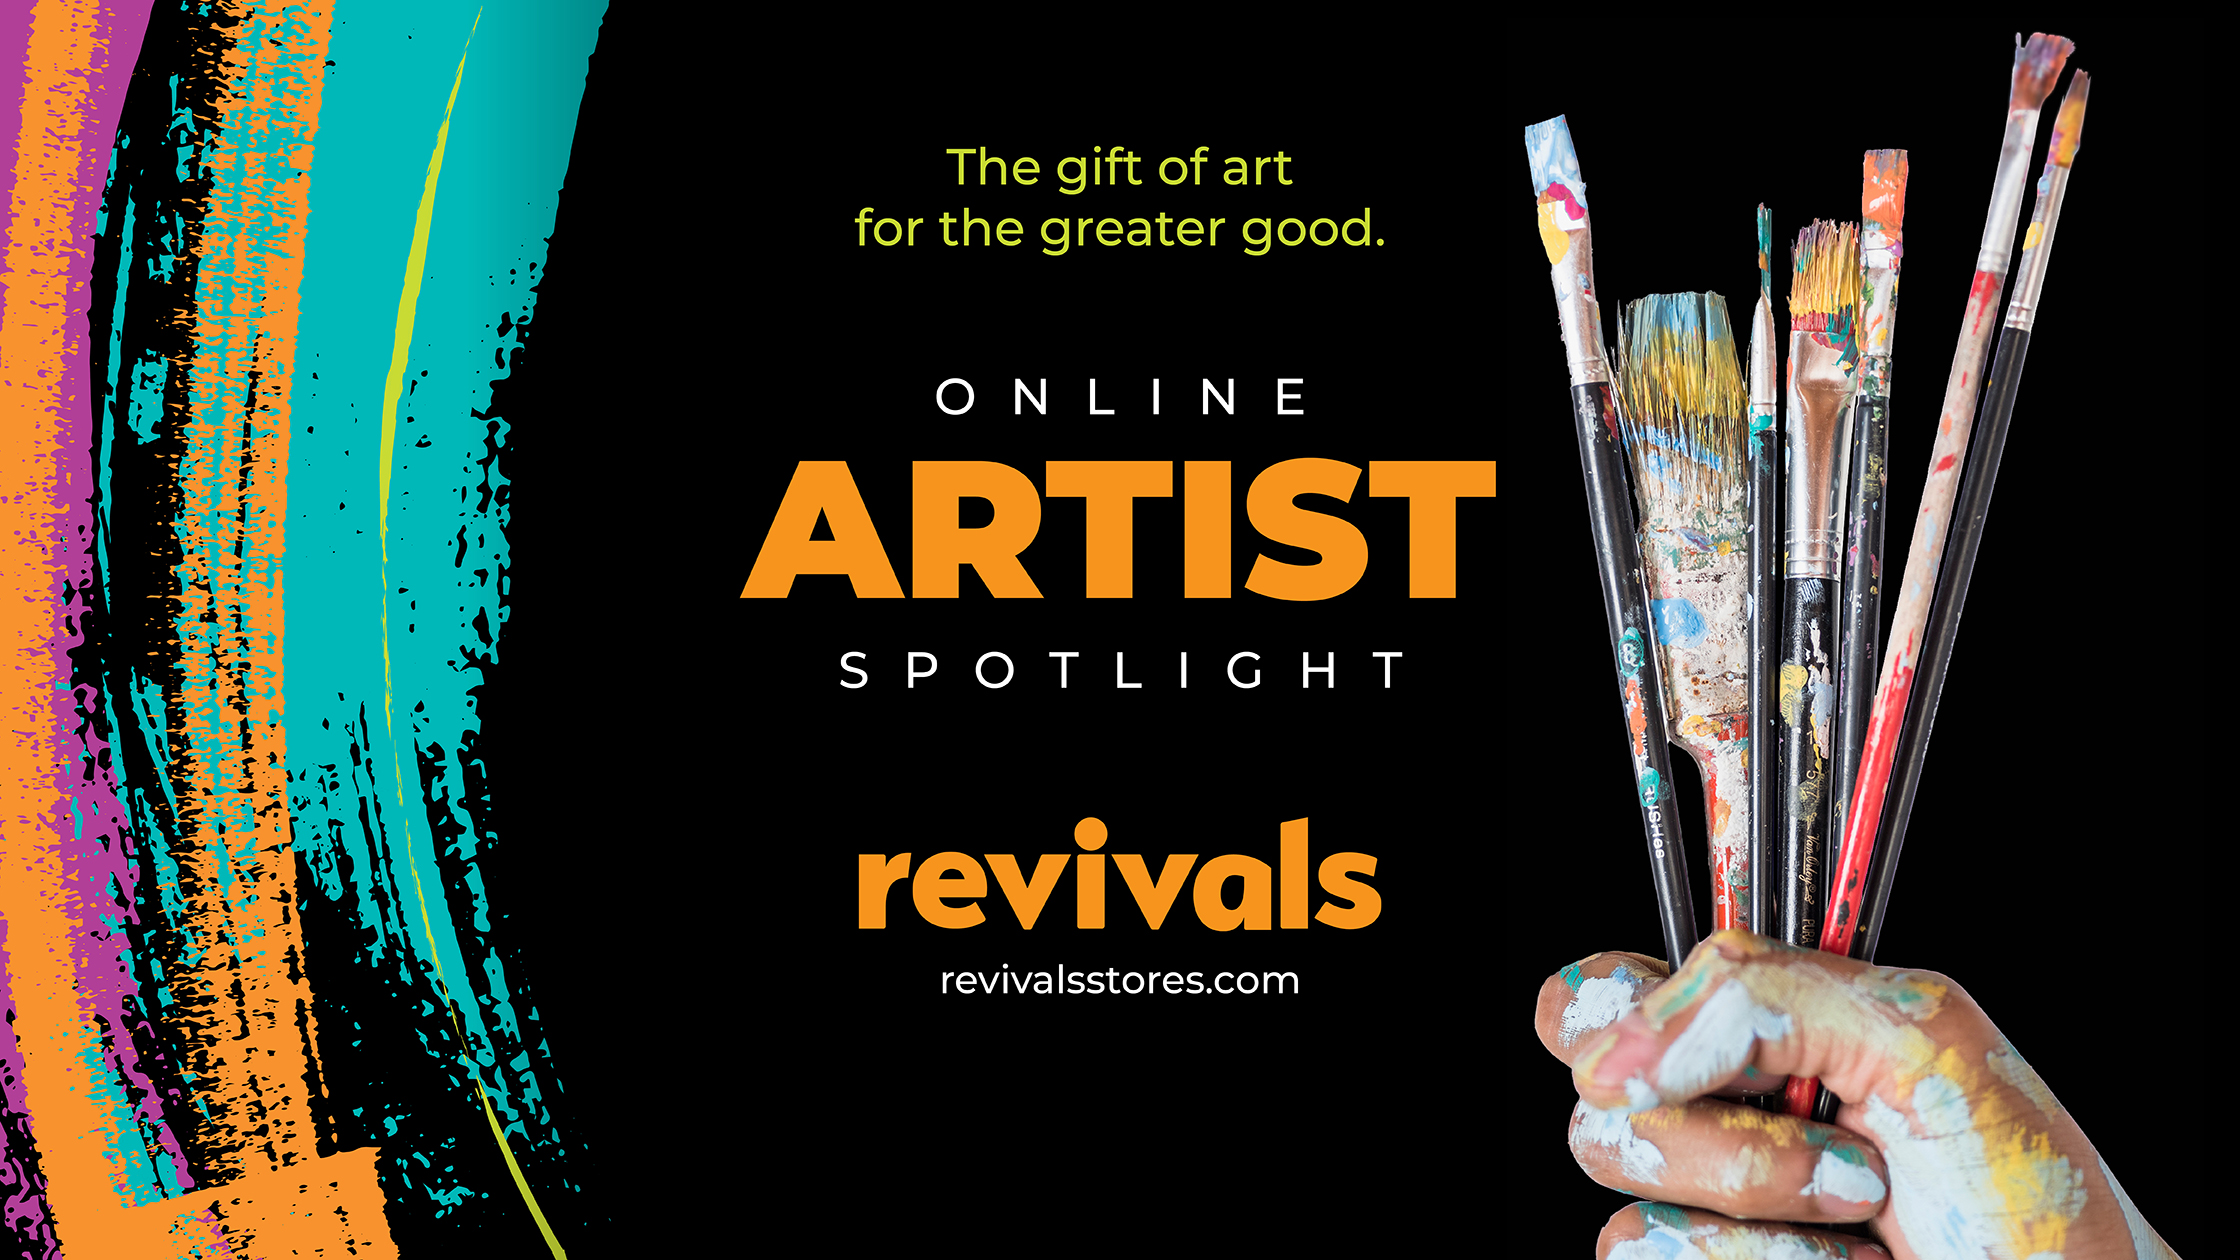 Revivals Online Artist Spotlight Feature …